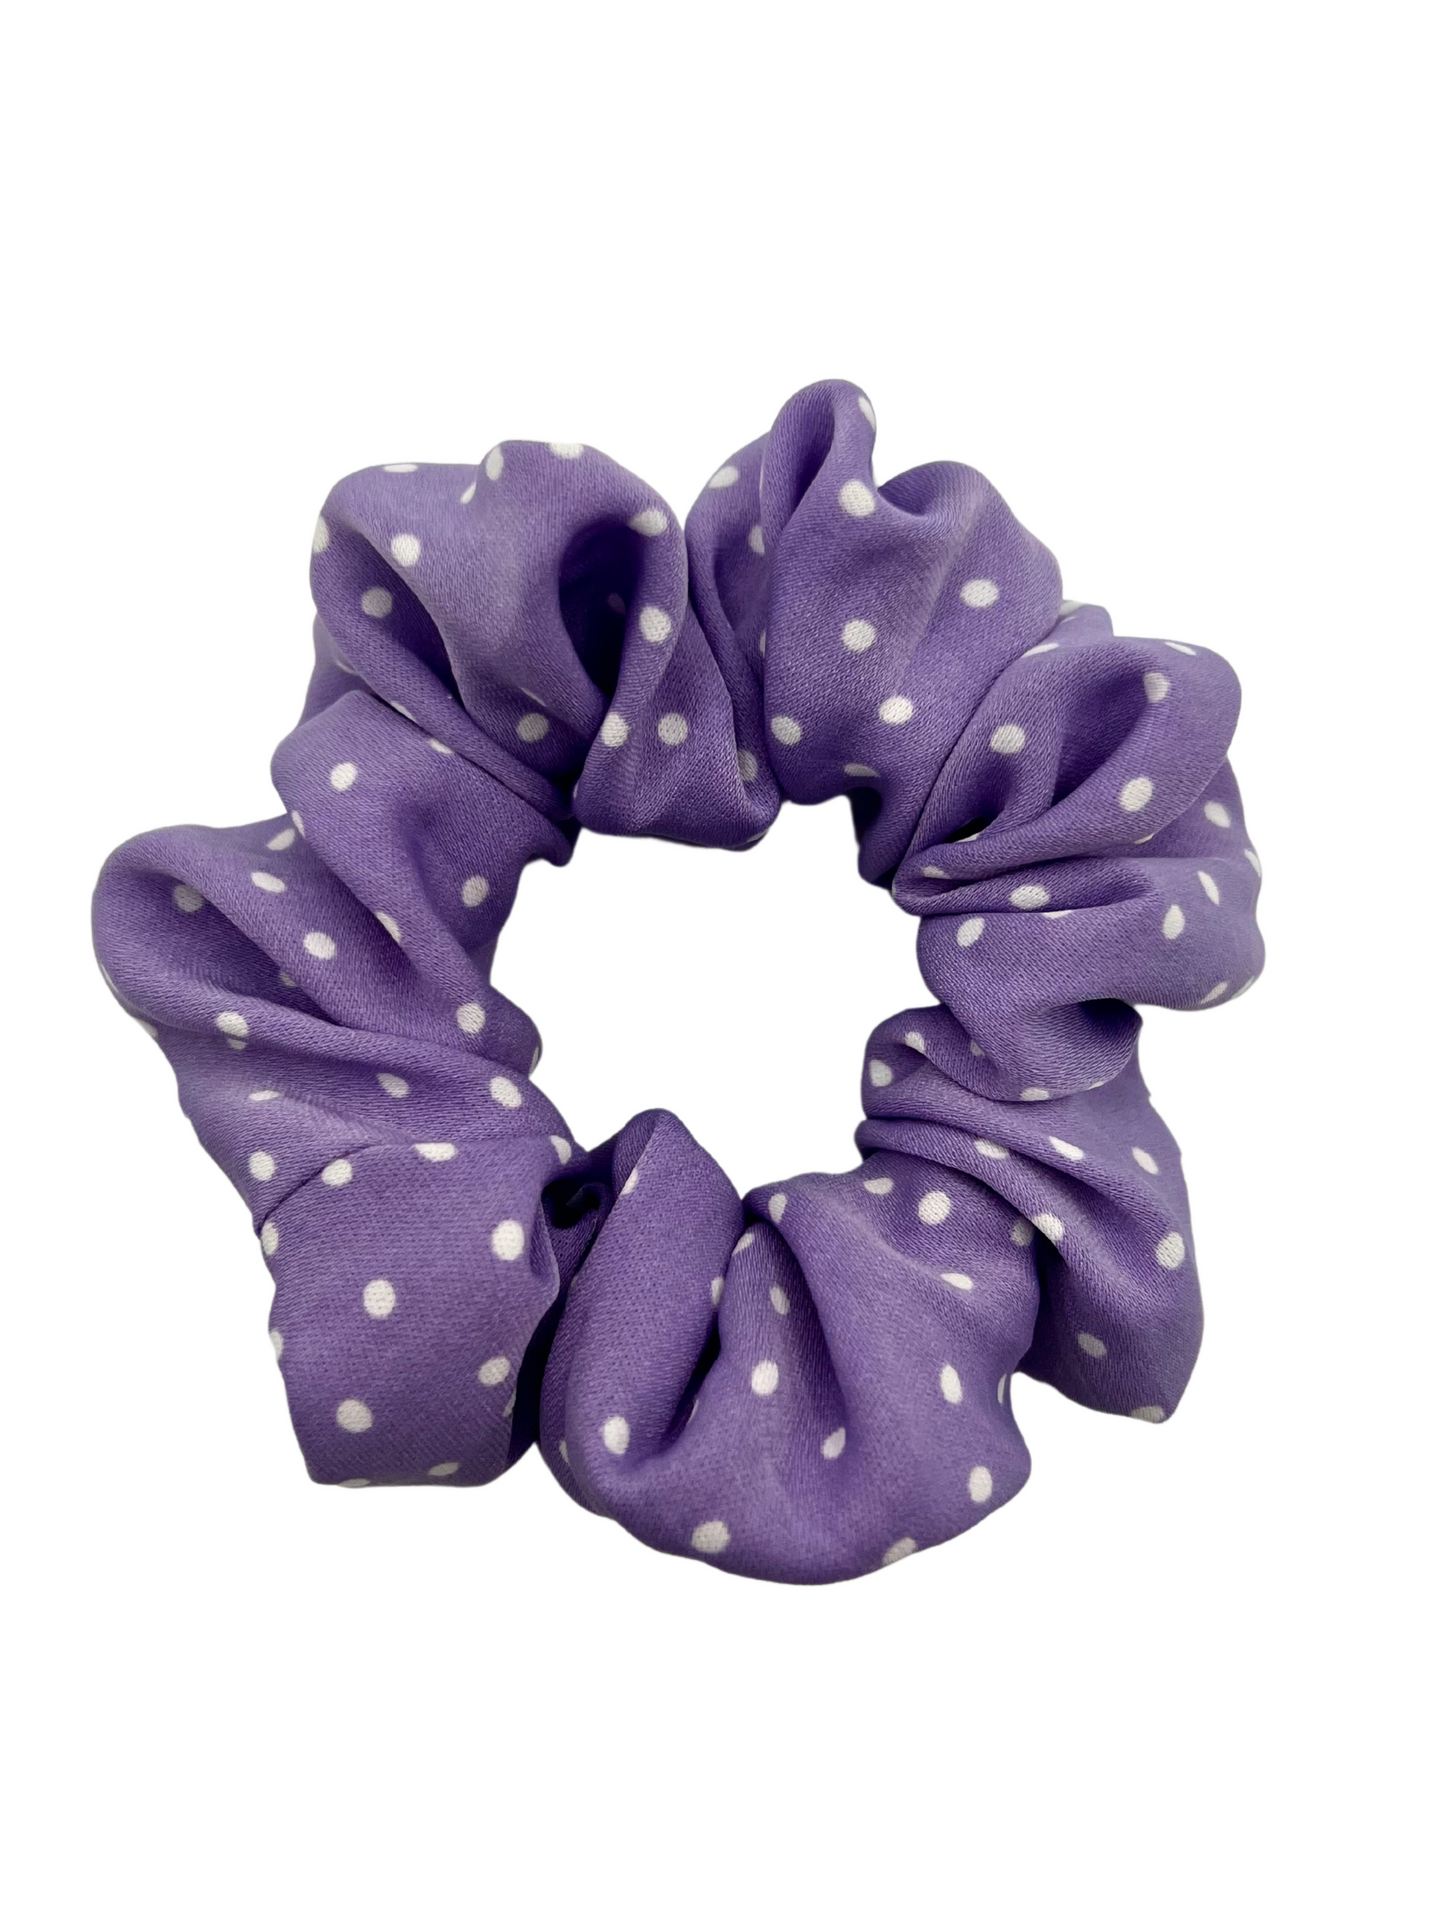 Scrunchie - Lavender Confetti